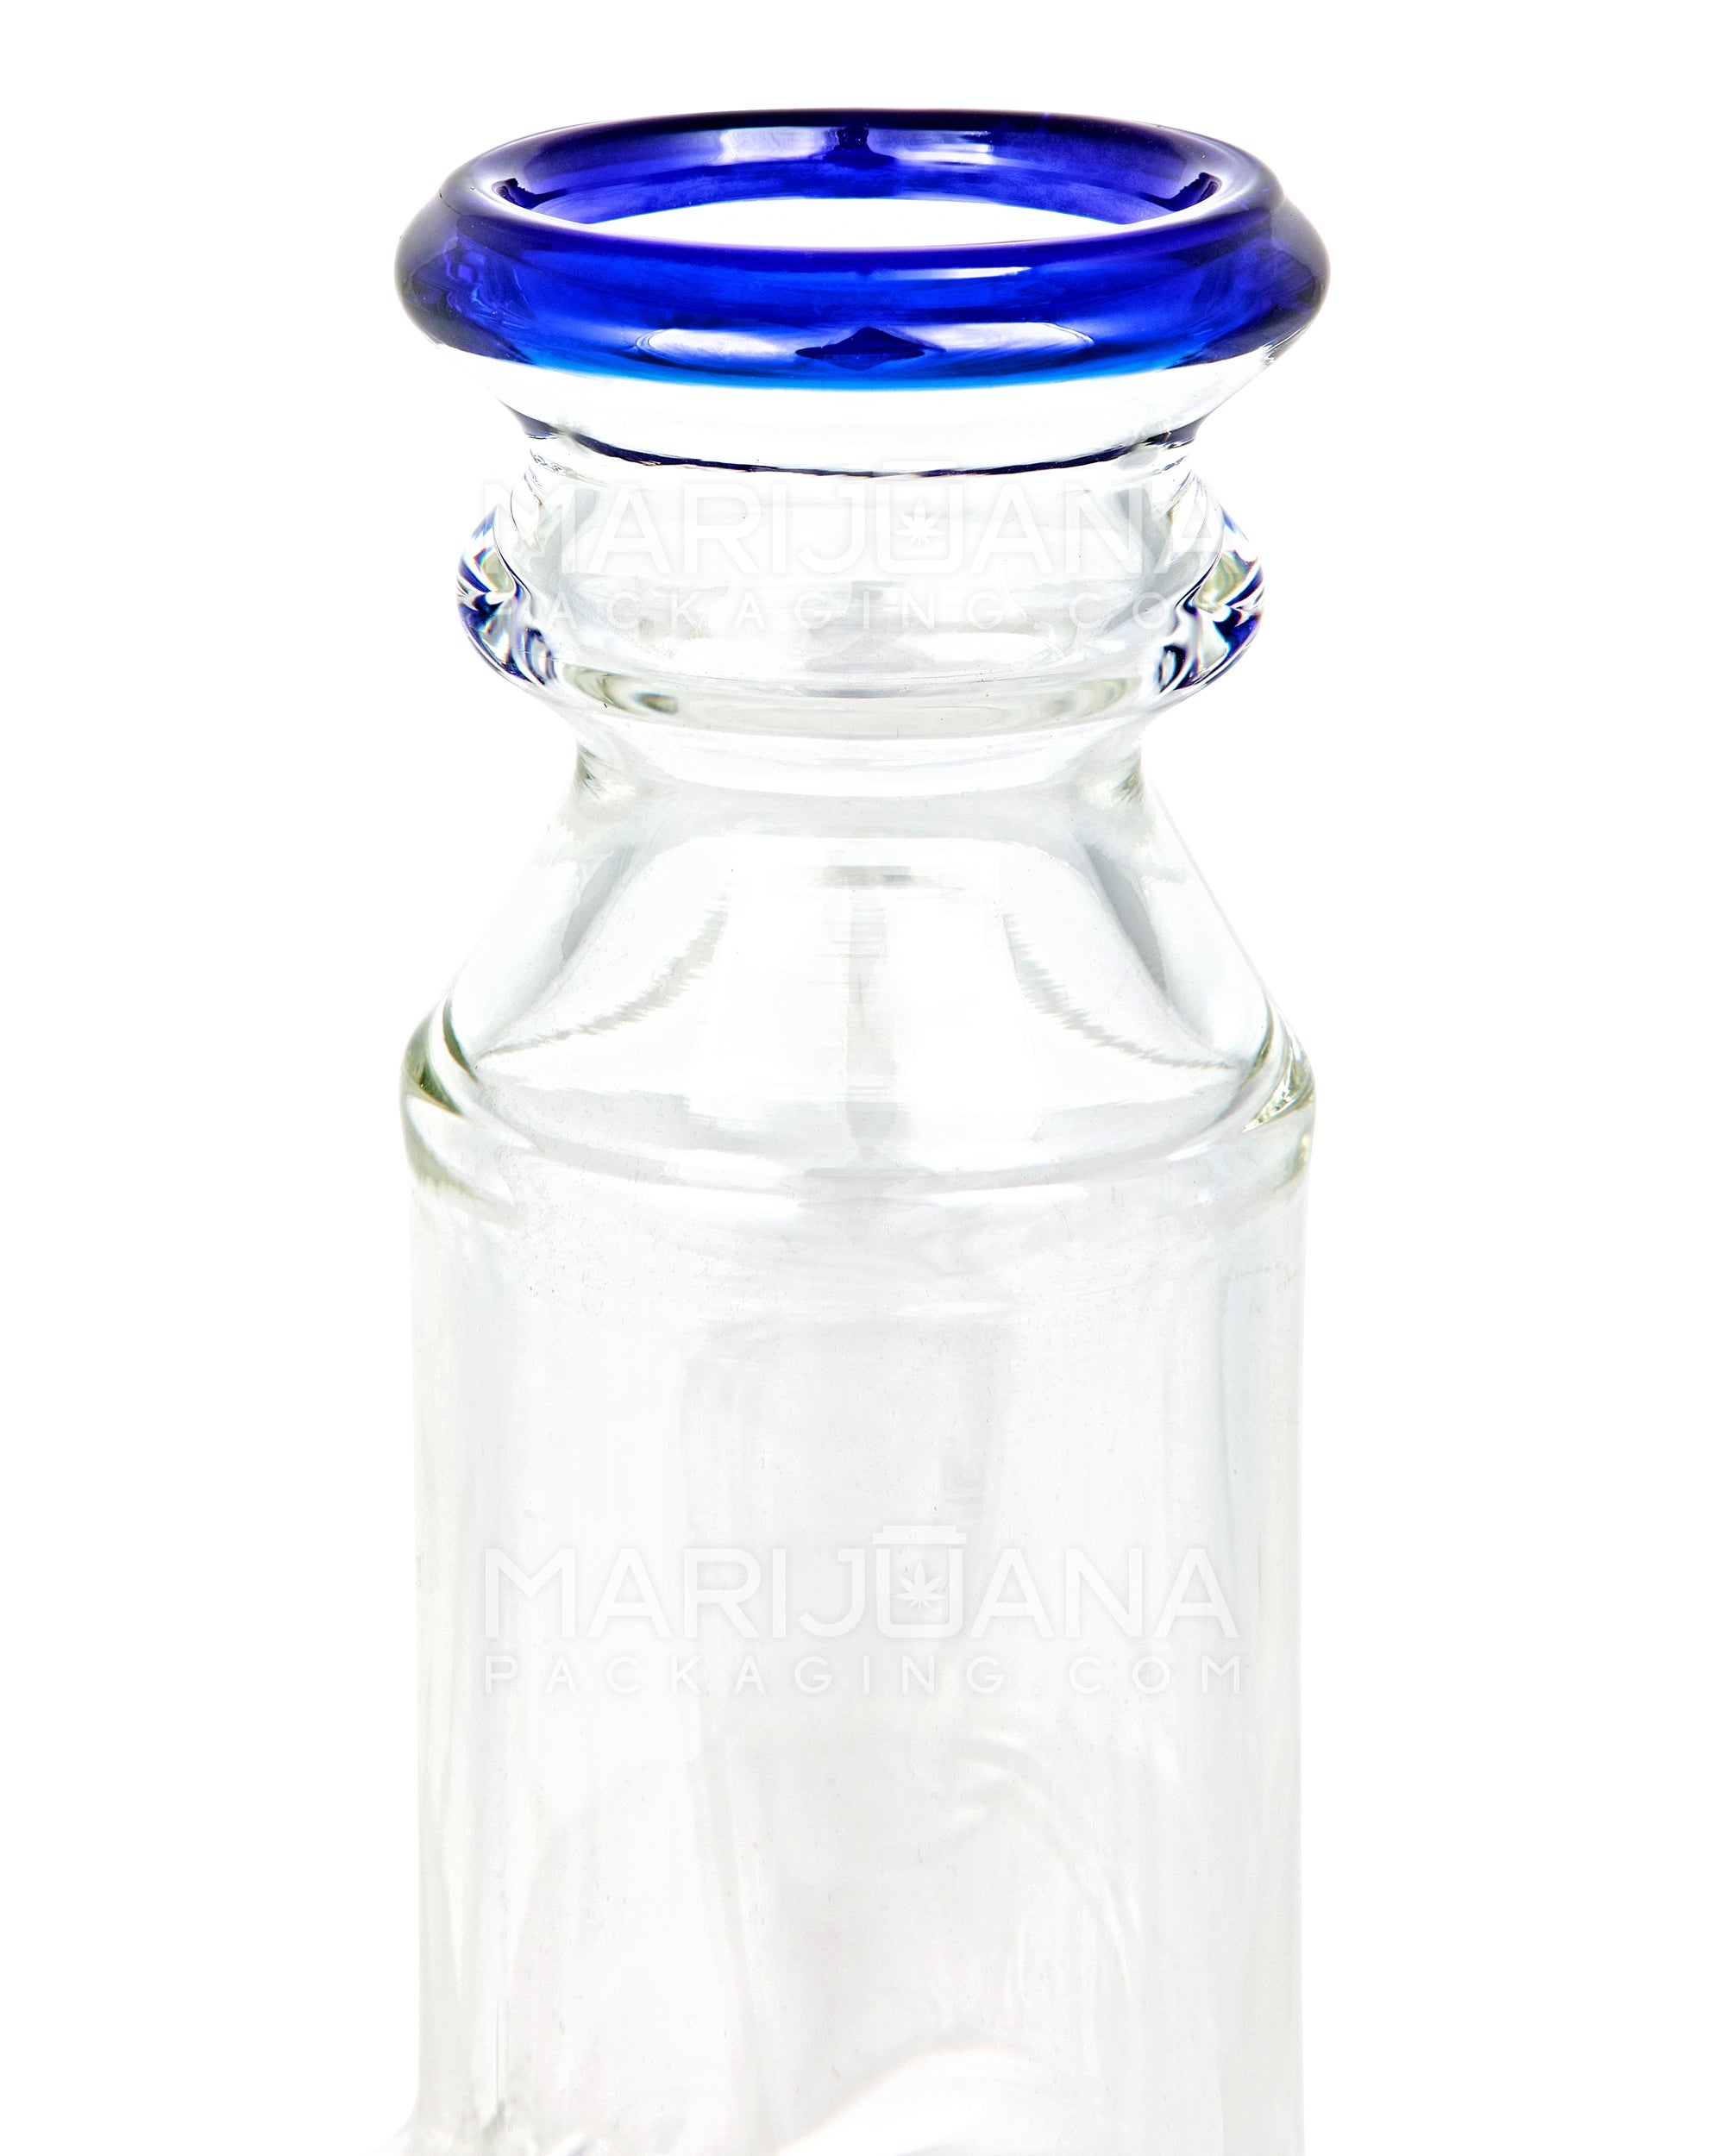 Z-Neck Atomic Perc Glass Beaker Water Pipe | 7in Tall - 14mm Bowl - Blue - 3